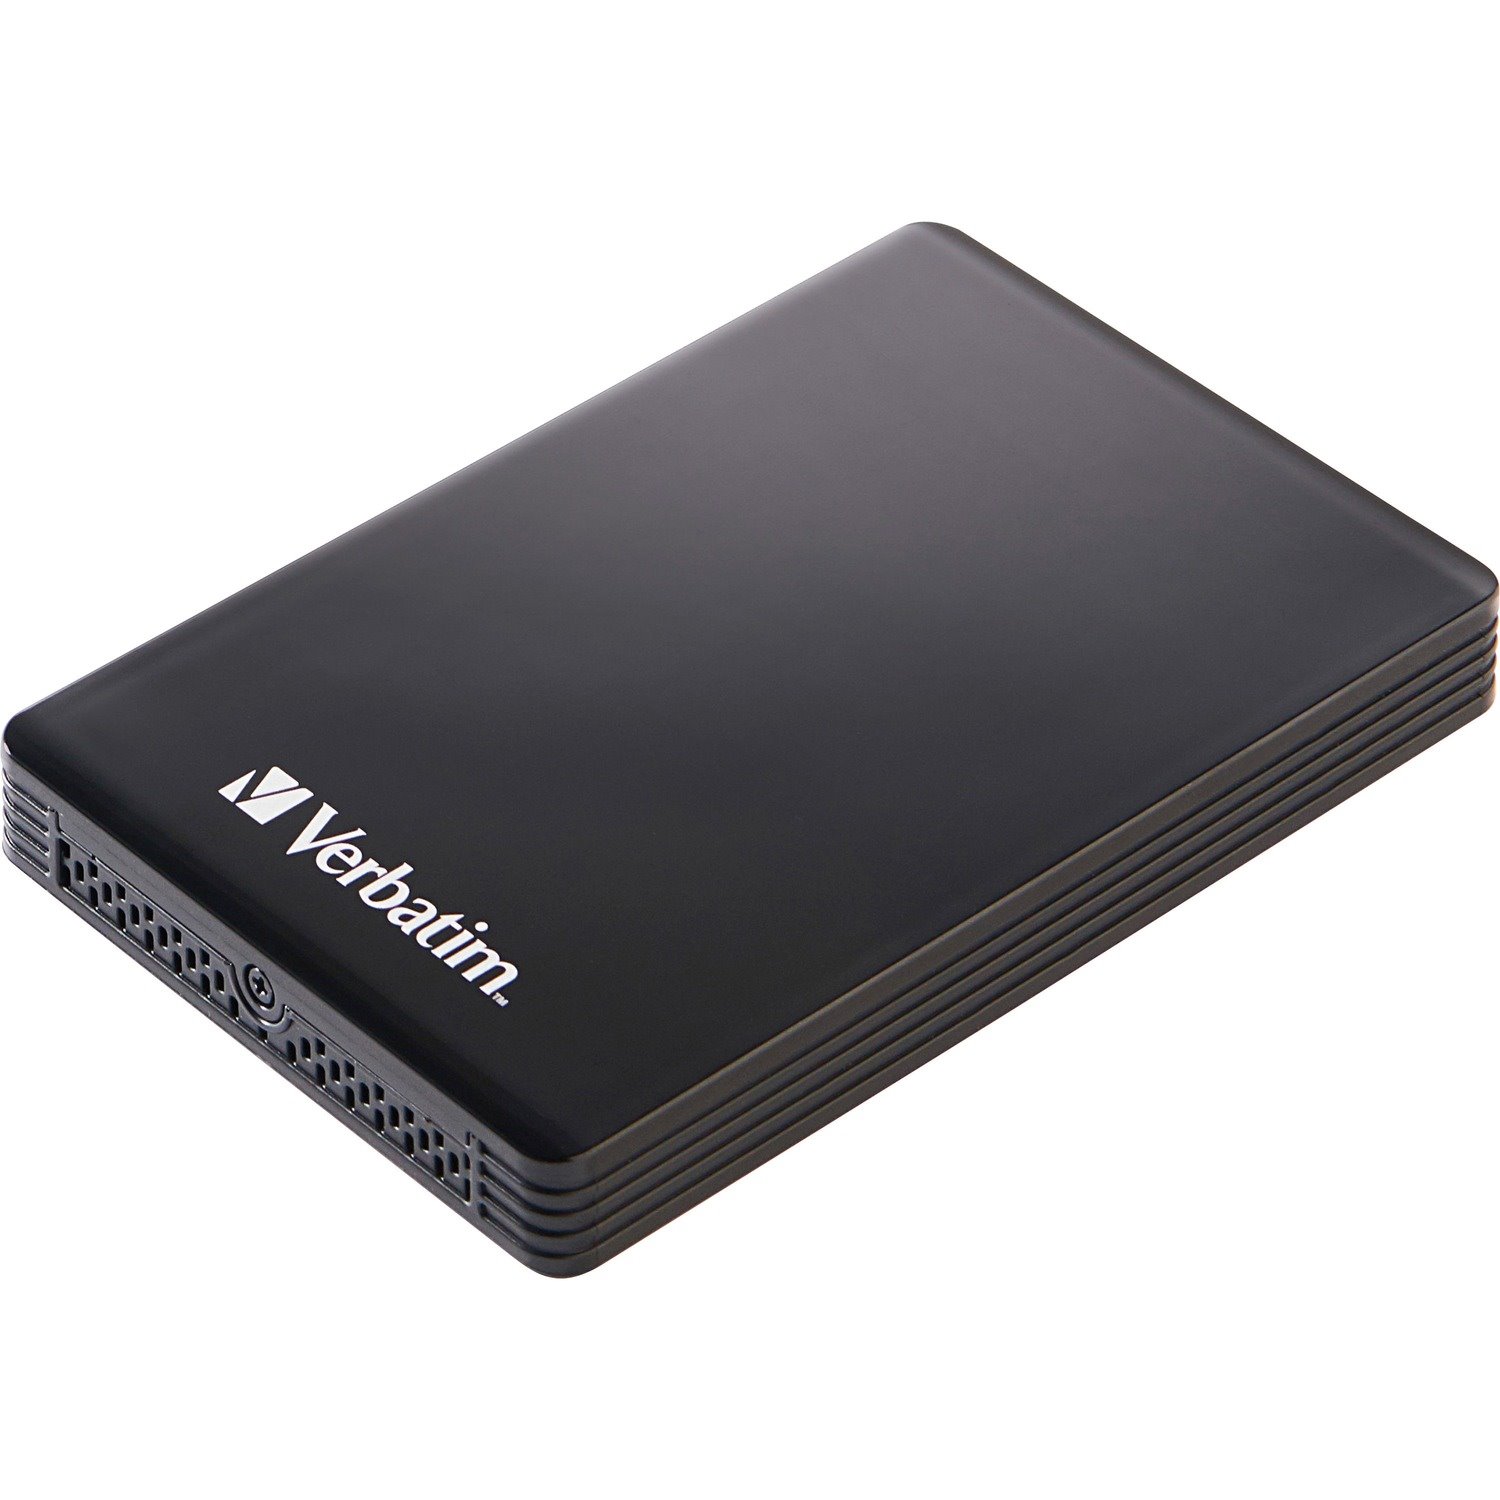 Verbatim 128GB Vx460 External SSD, USB 3.1 Gen 1 - Black